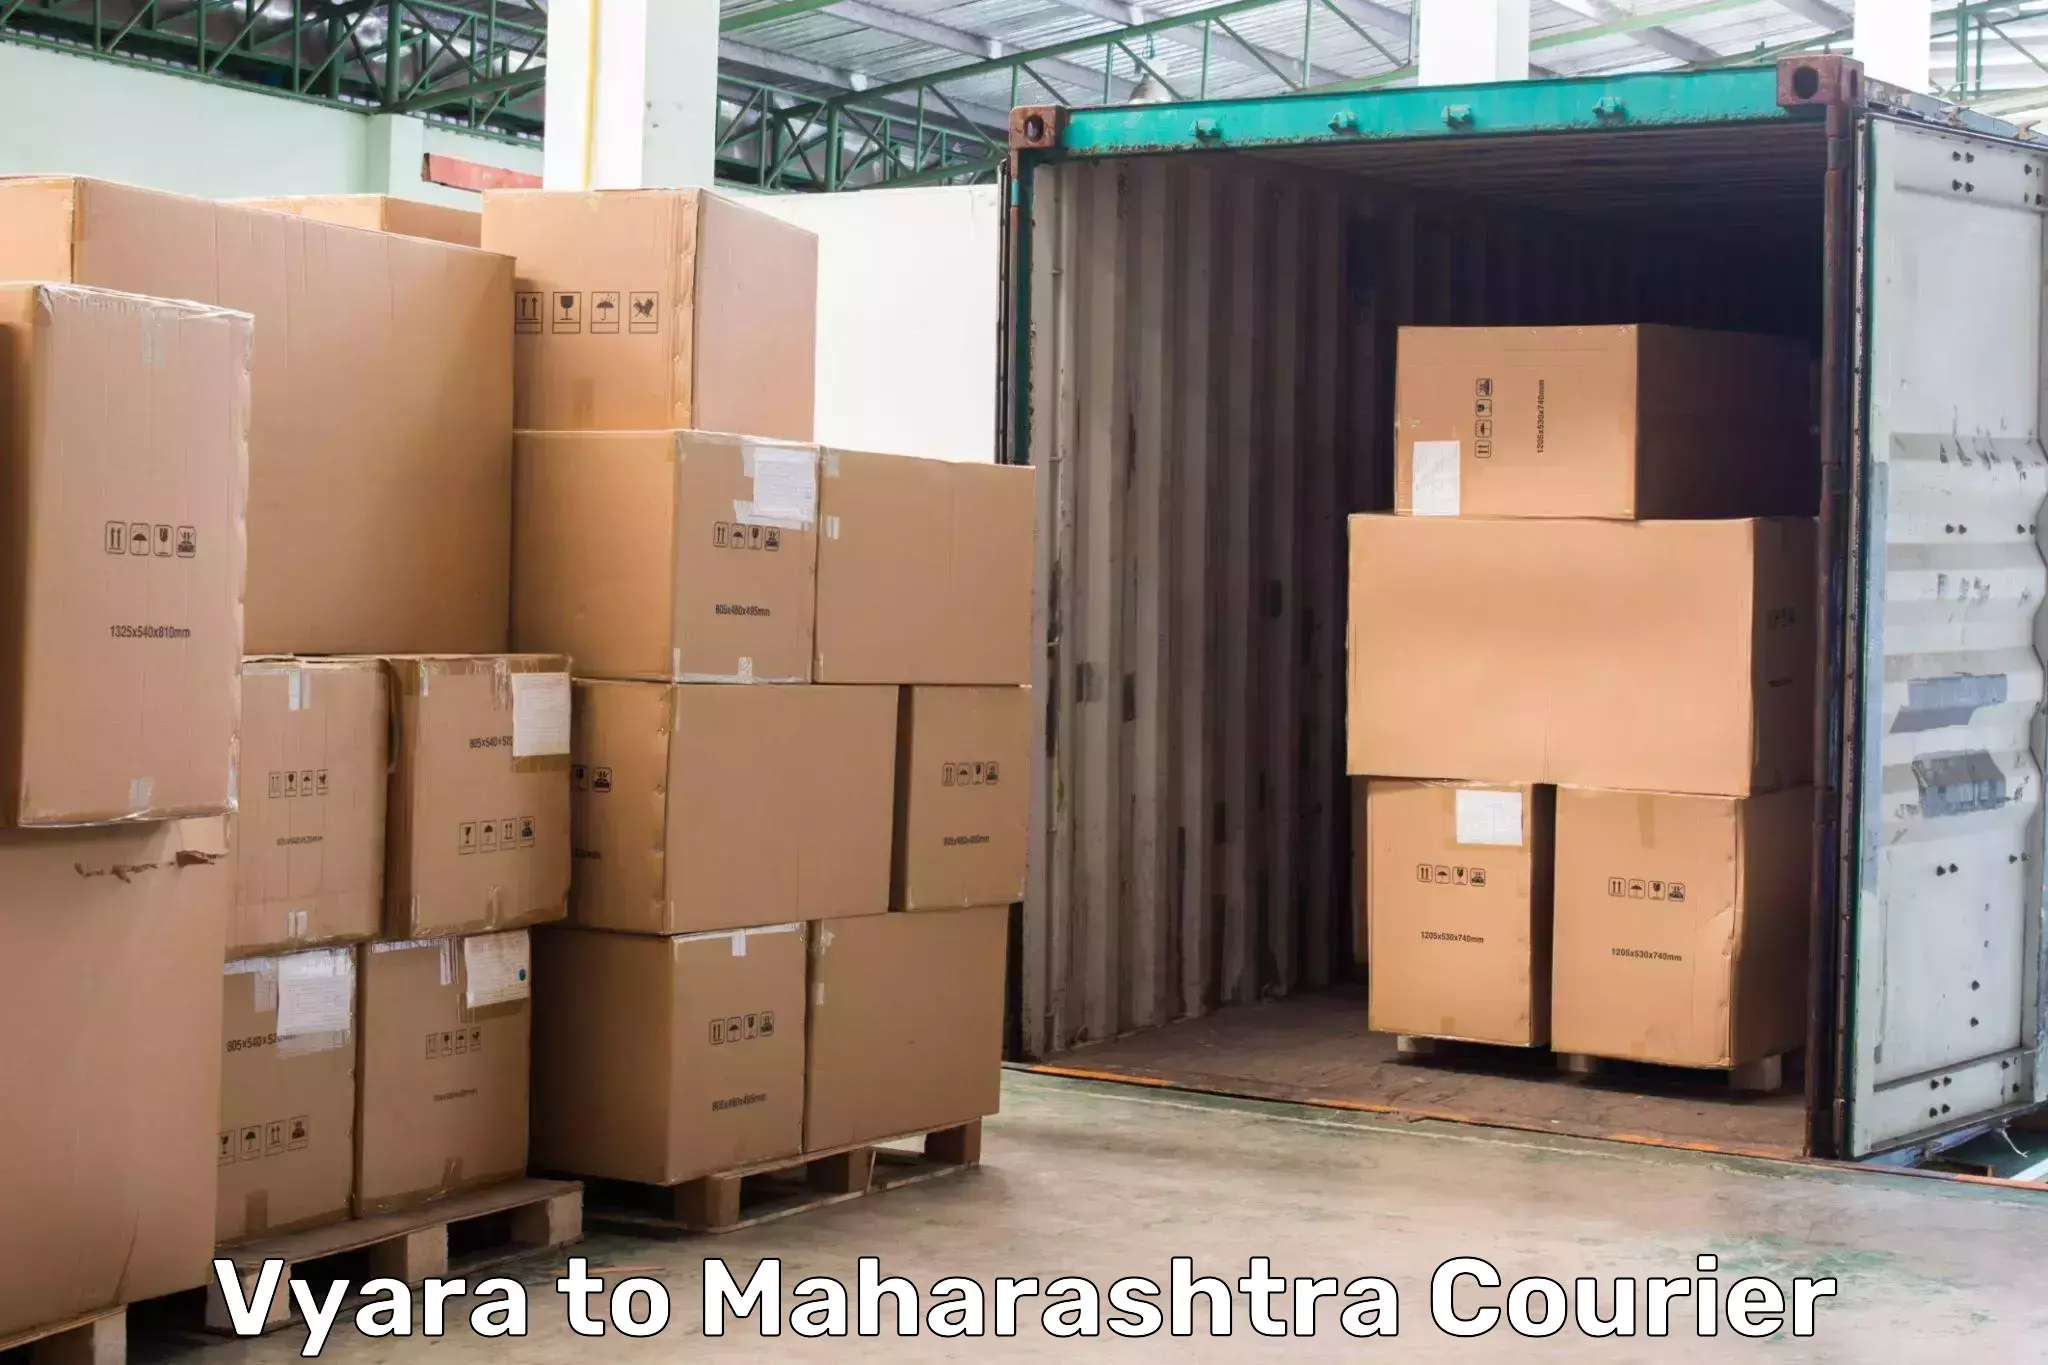 Expedited shipping methods Vyara to Solapur